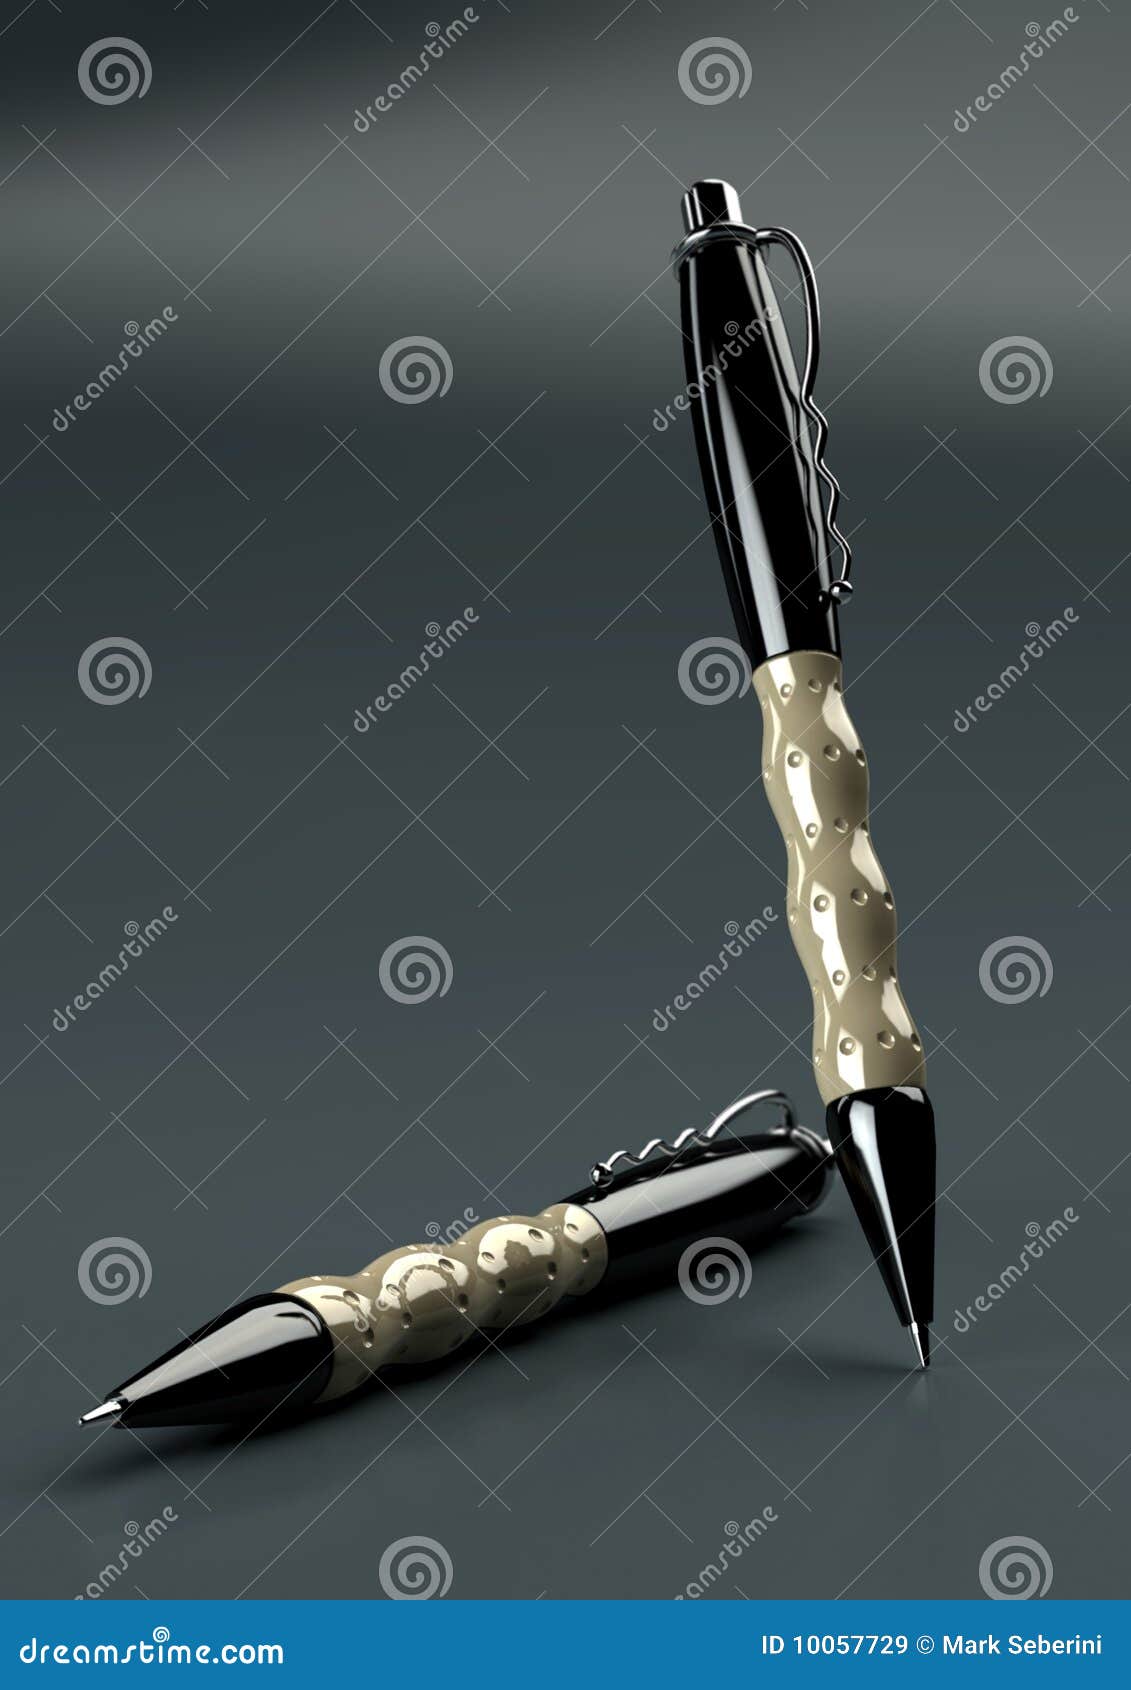 2 executive style pens